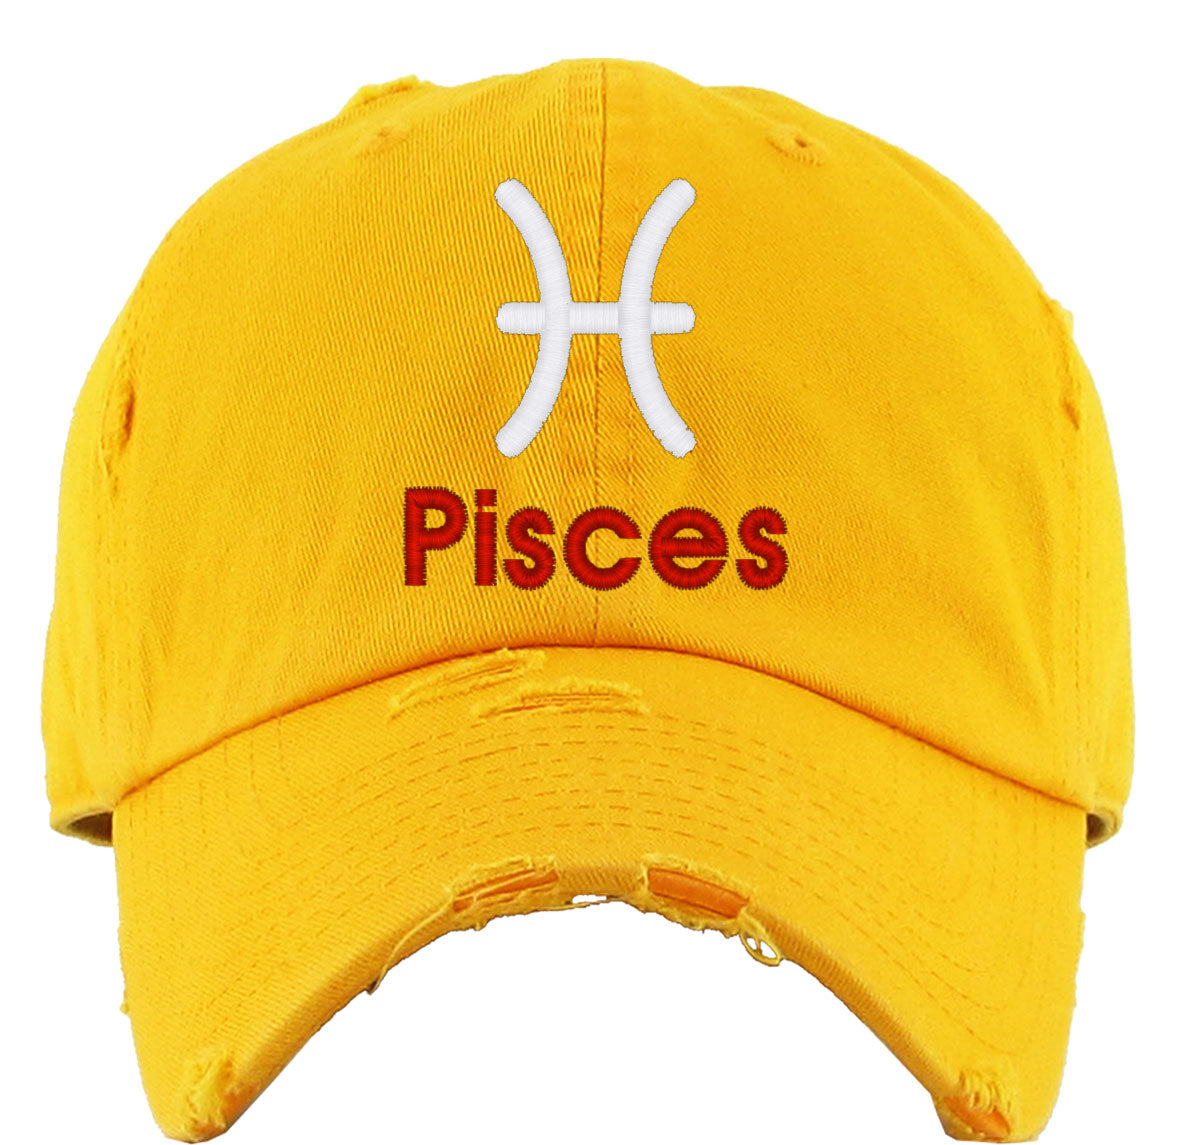 Pisces Zodiac Sign Horoscope Astrology Vintage Baseball Cap